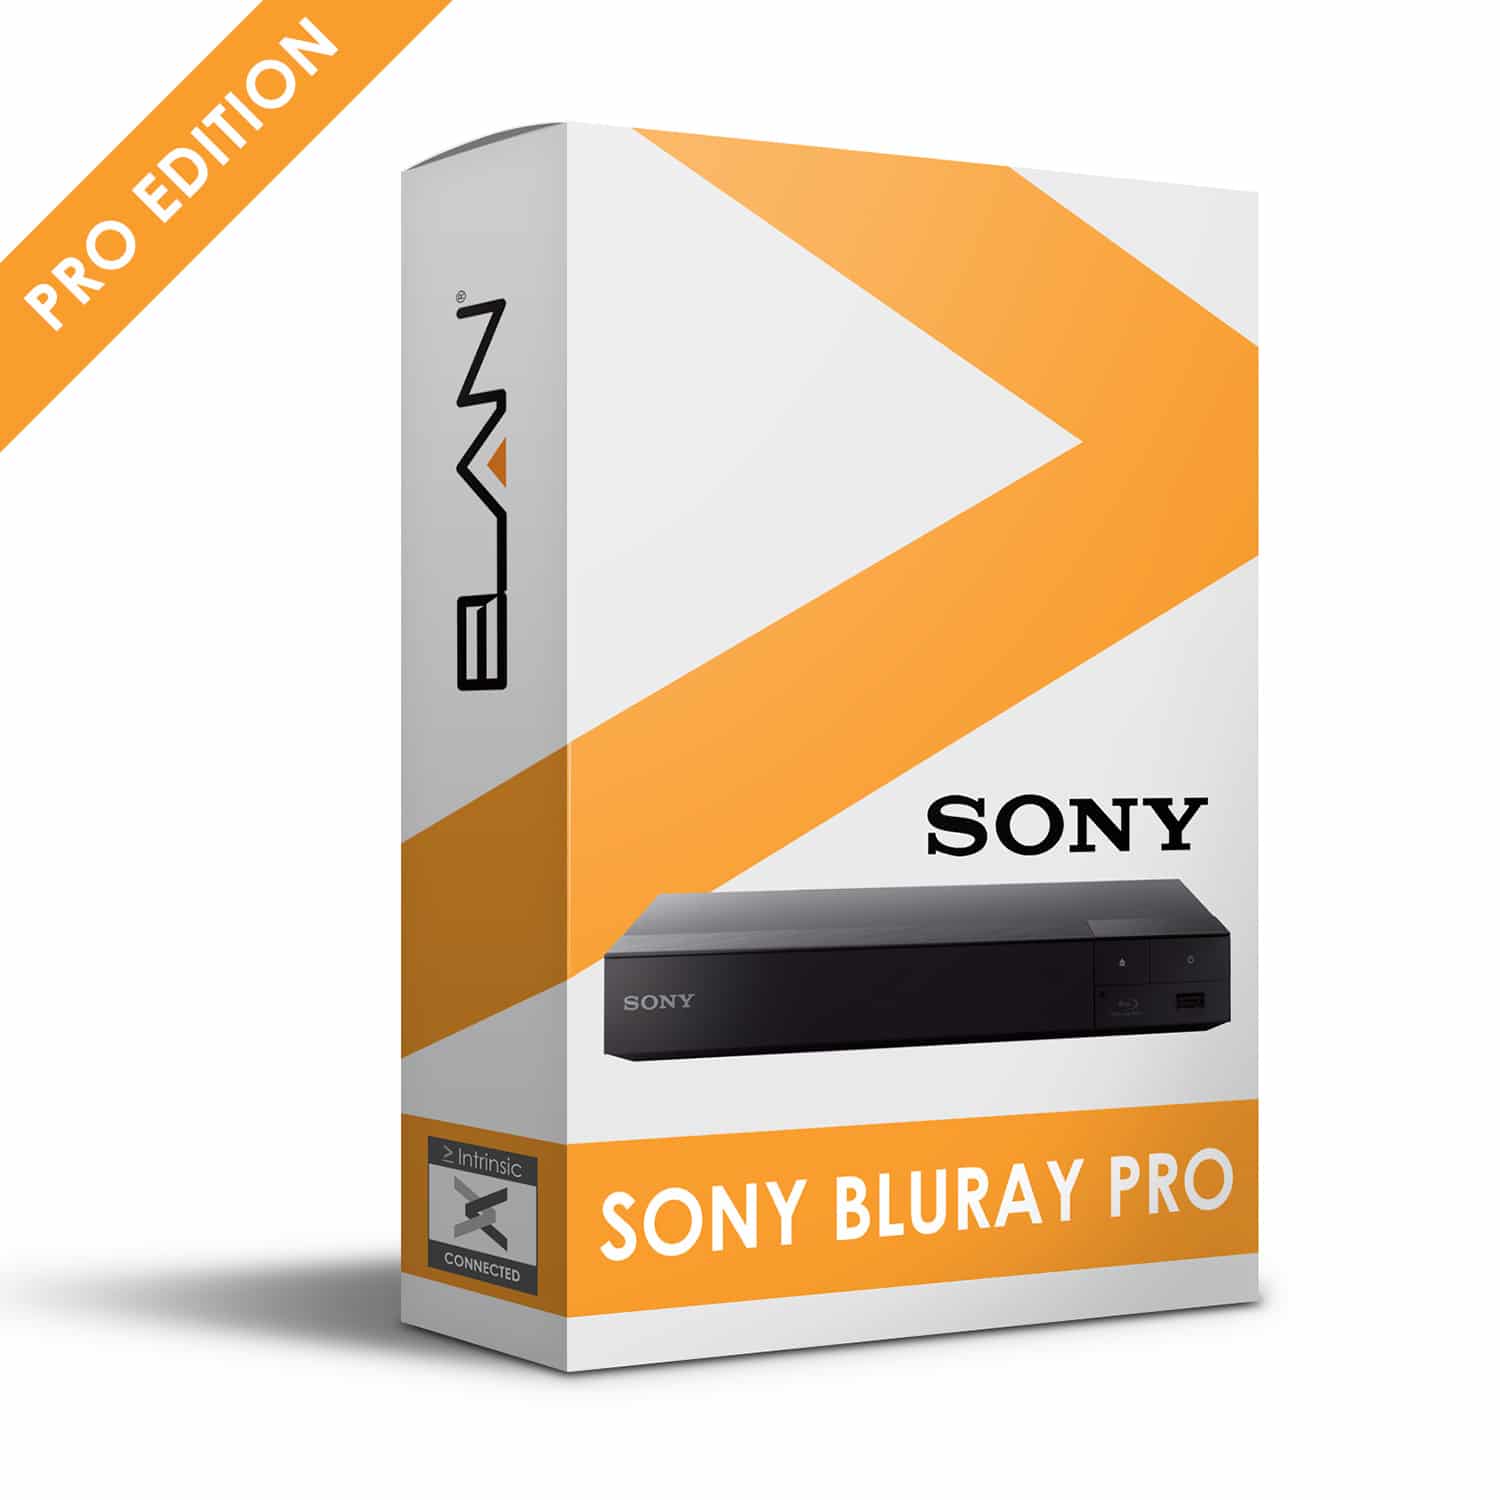 Sony Bluray Pro Driver for Elan